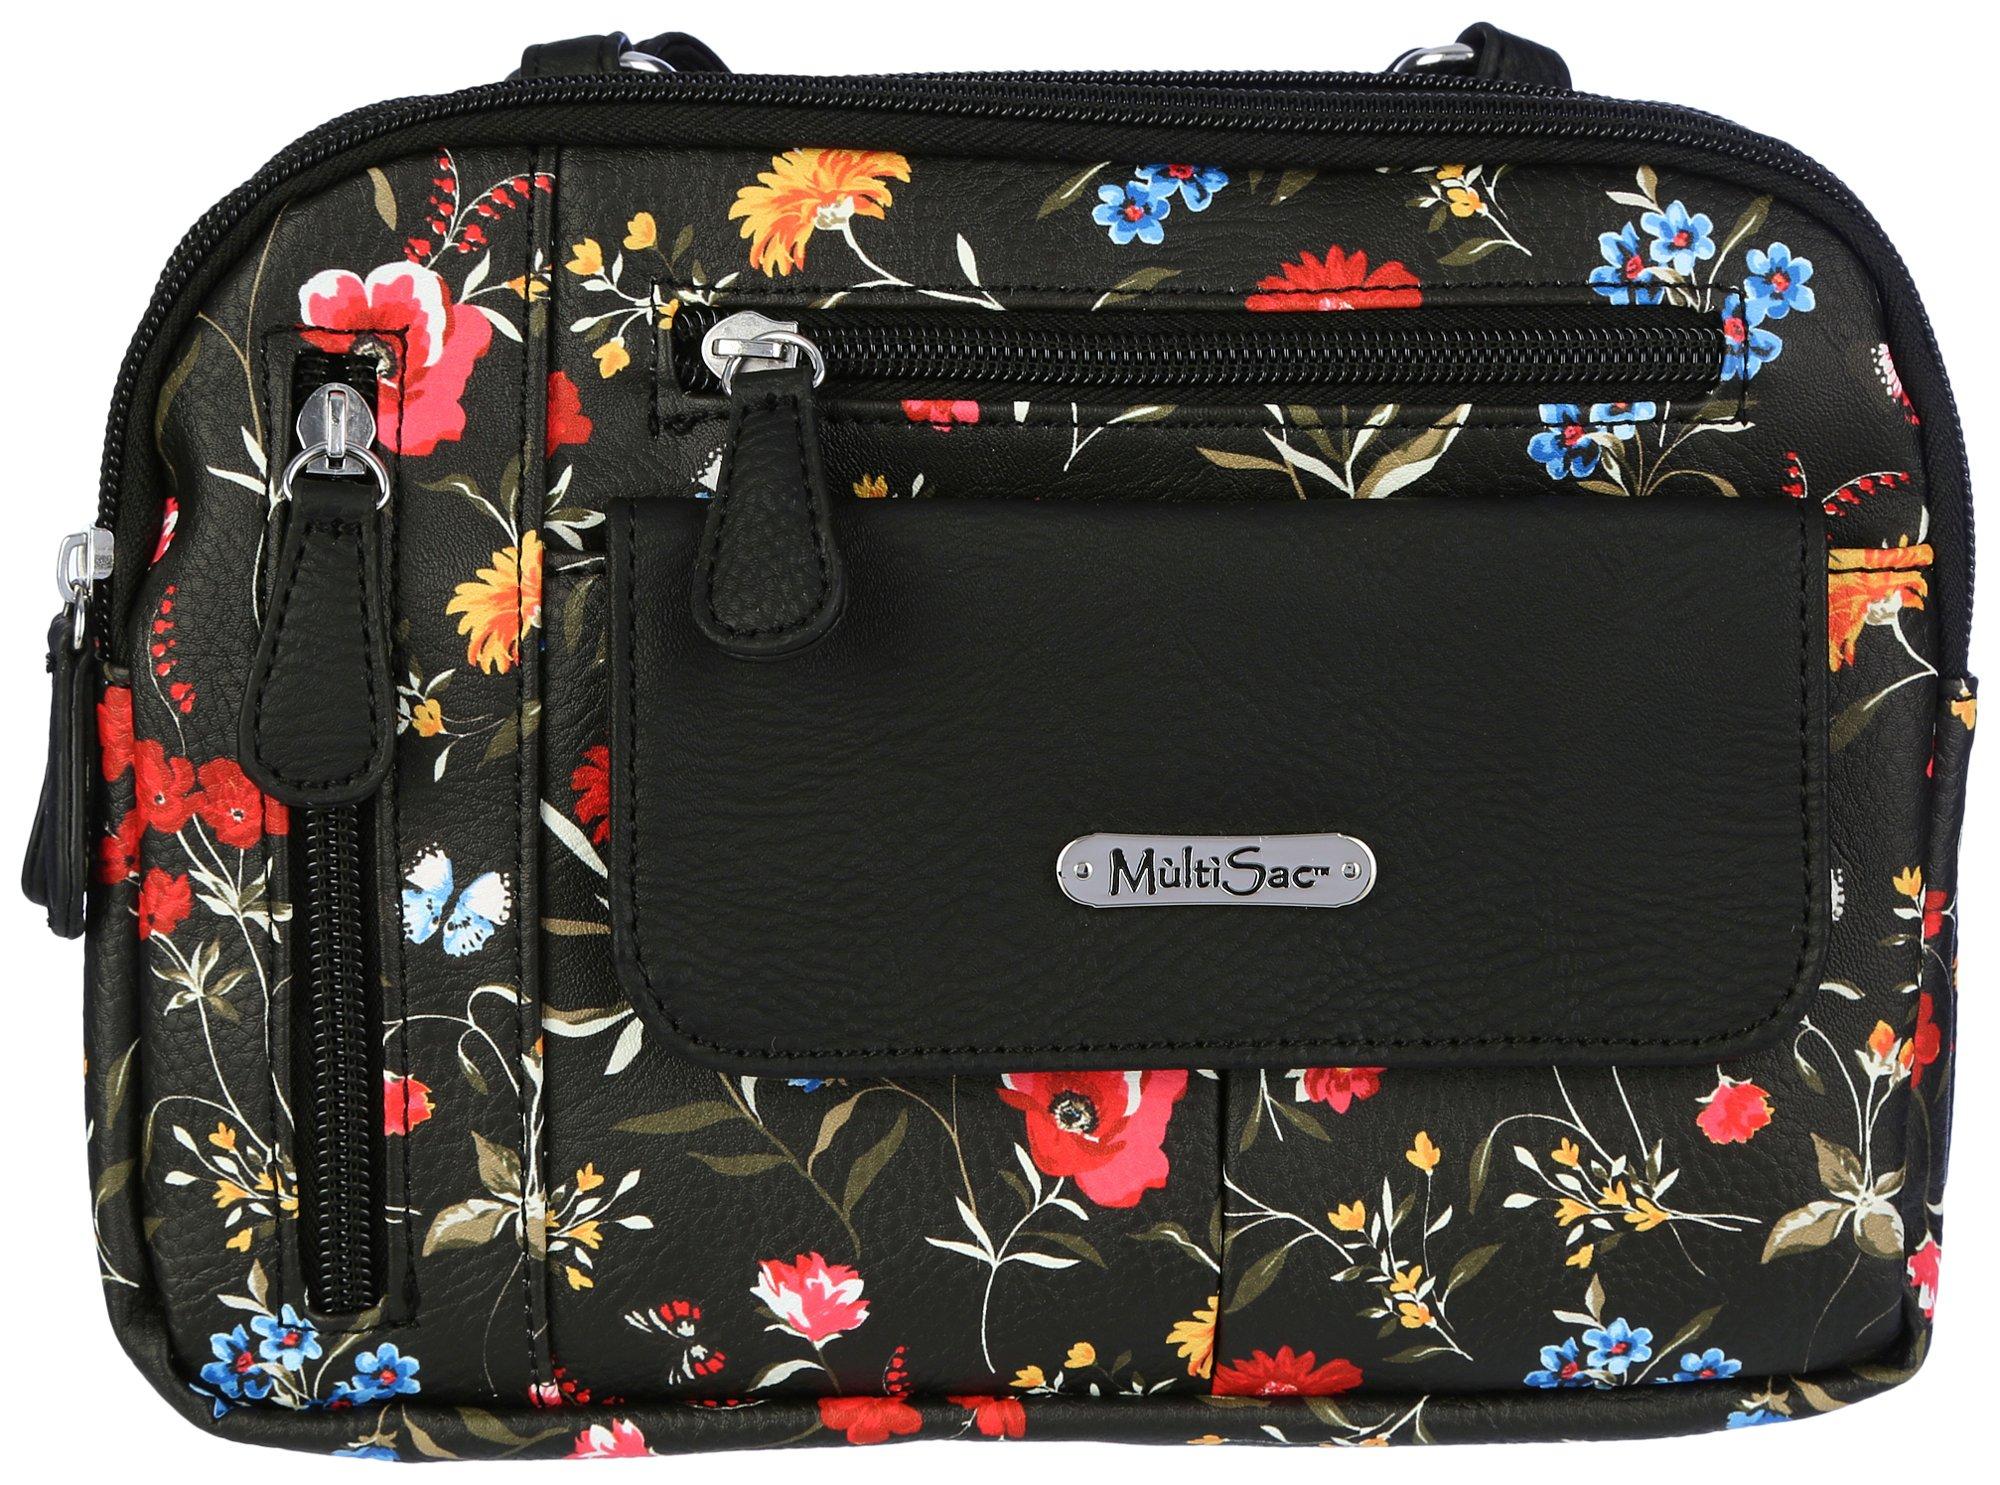 MultiSac Zippy Flower Print 3-Compartment Crossbody Bag